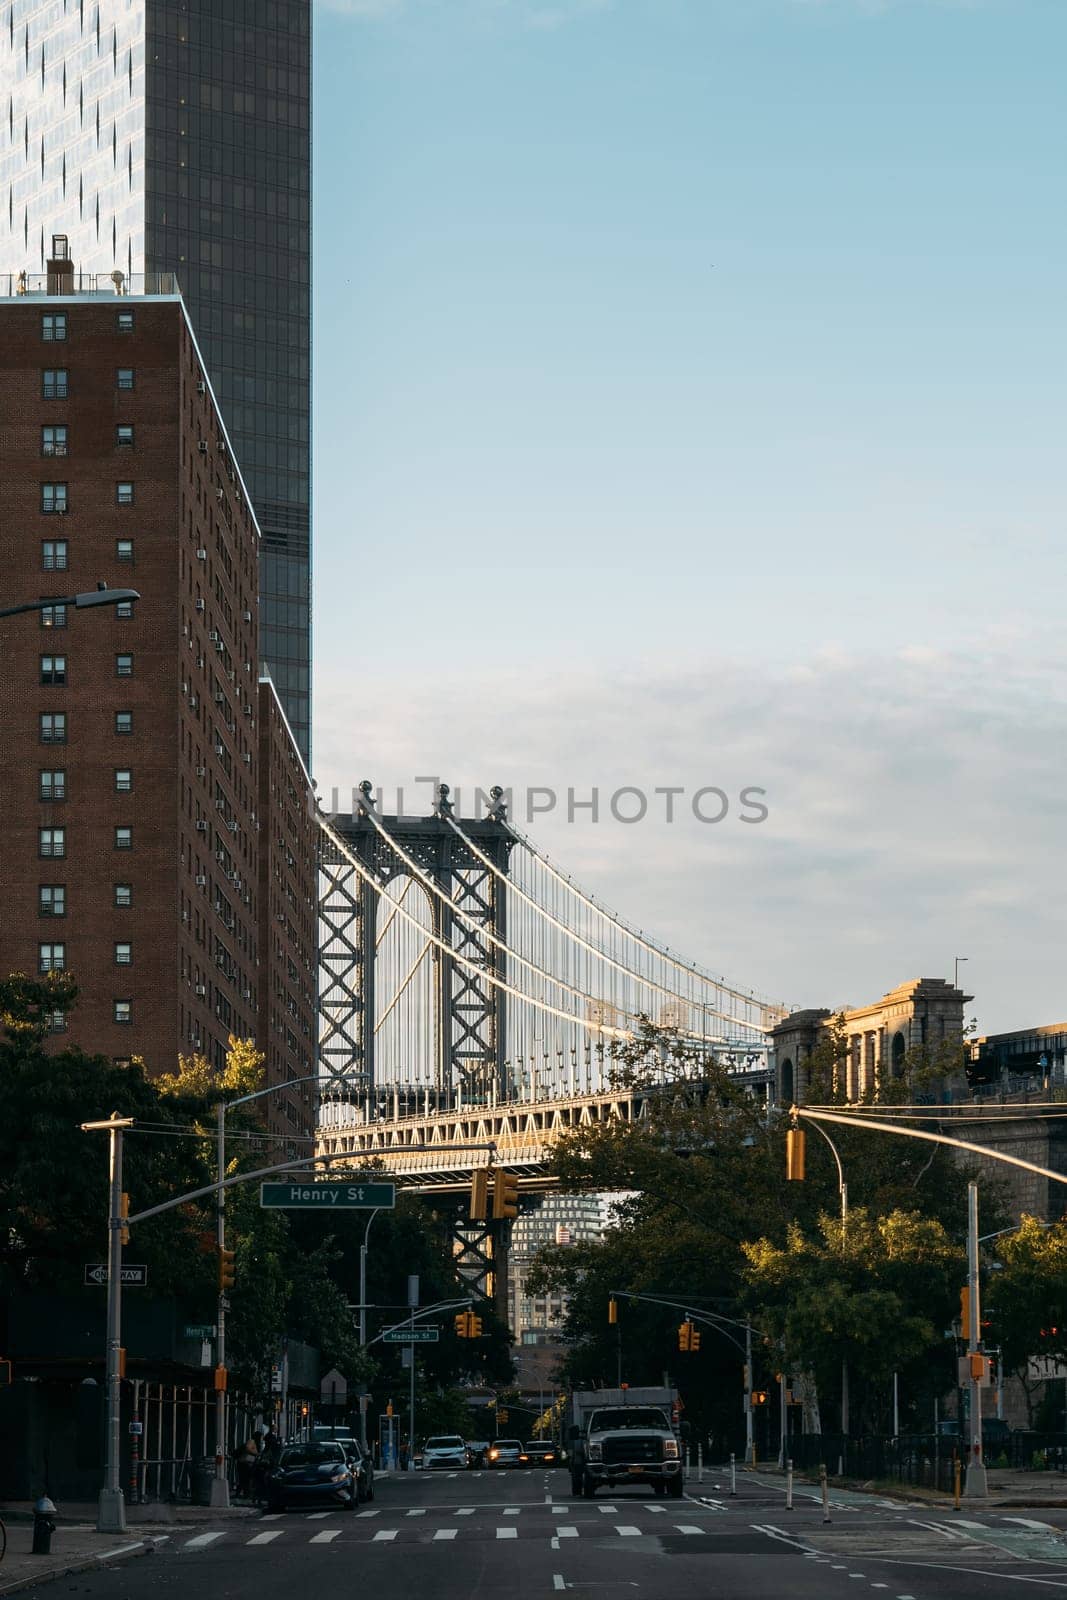 A view of the Manhattan Bridge spanning above a New York street scene.